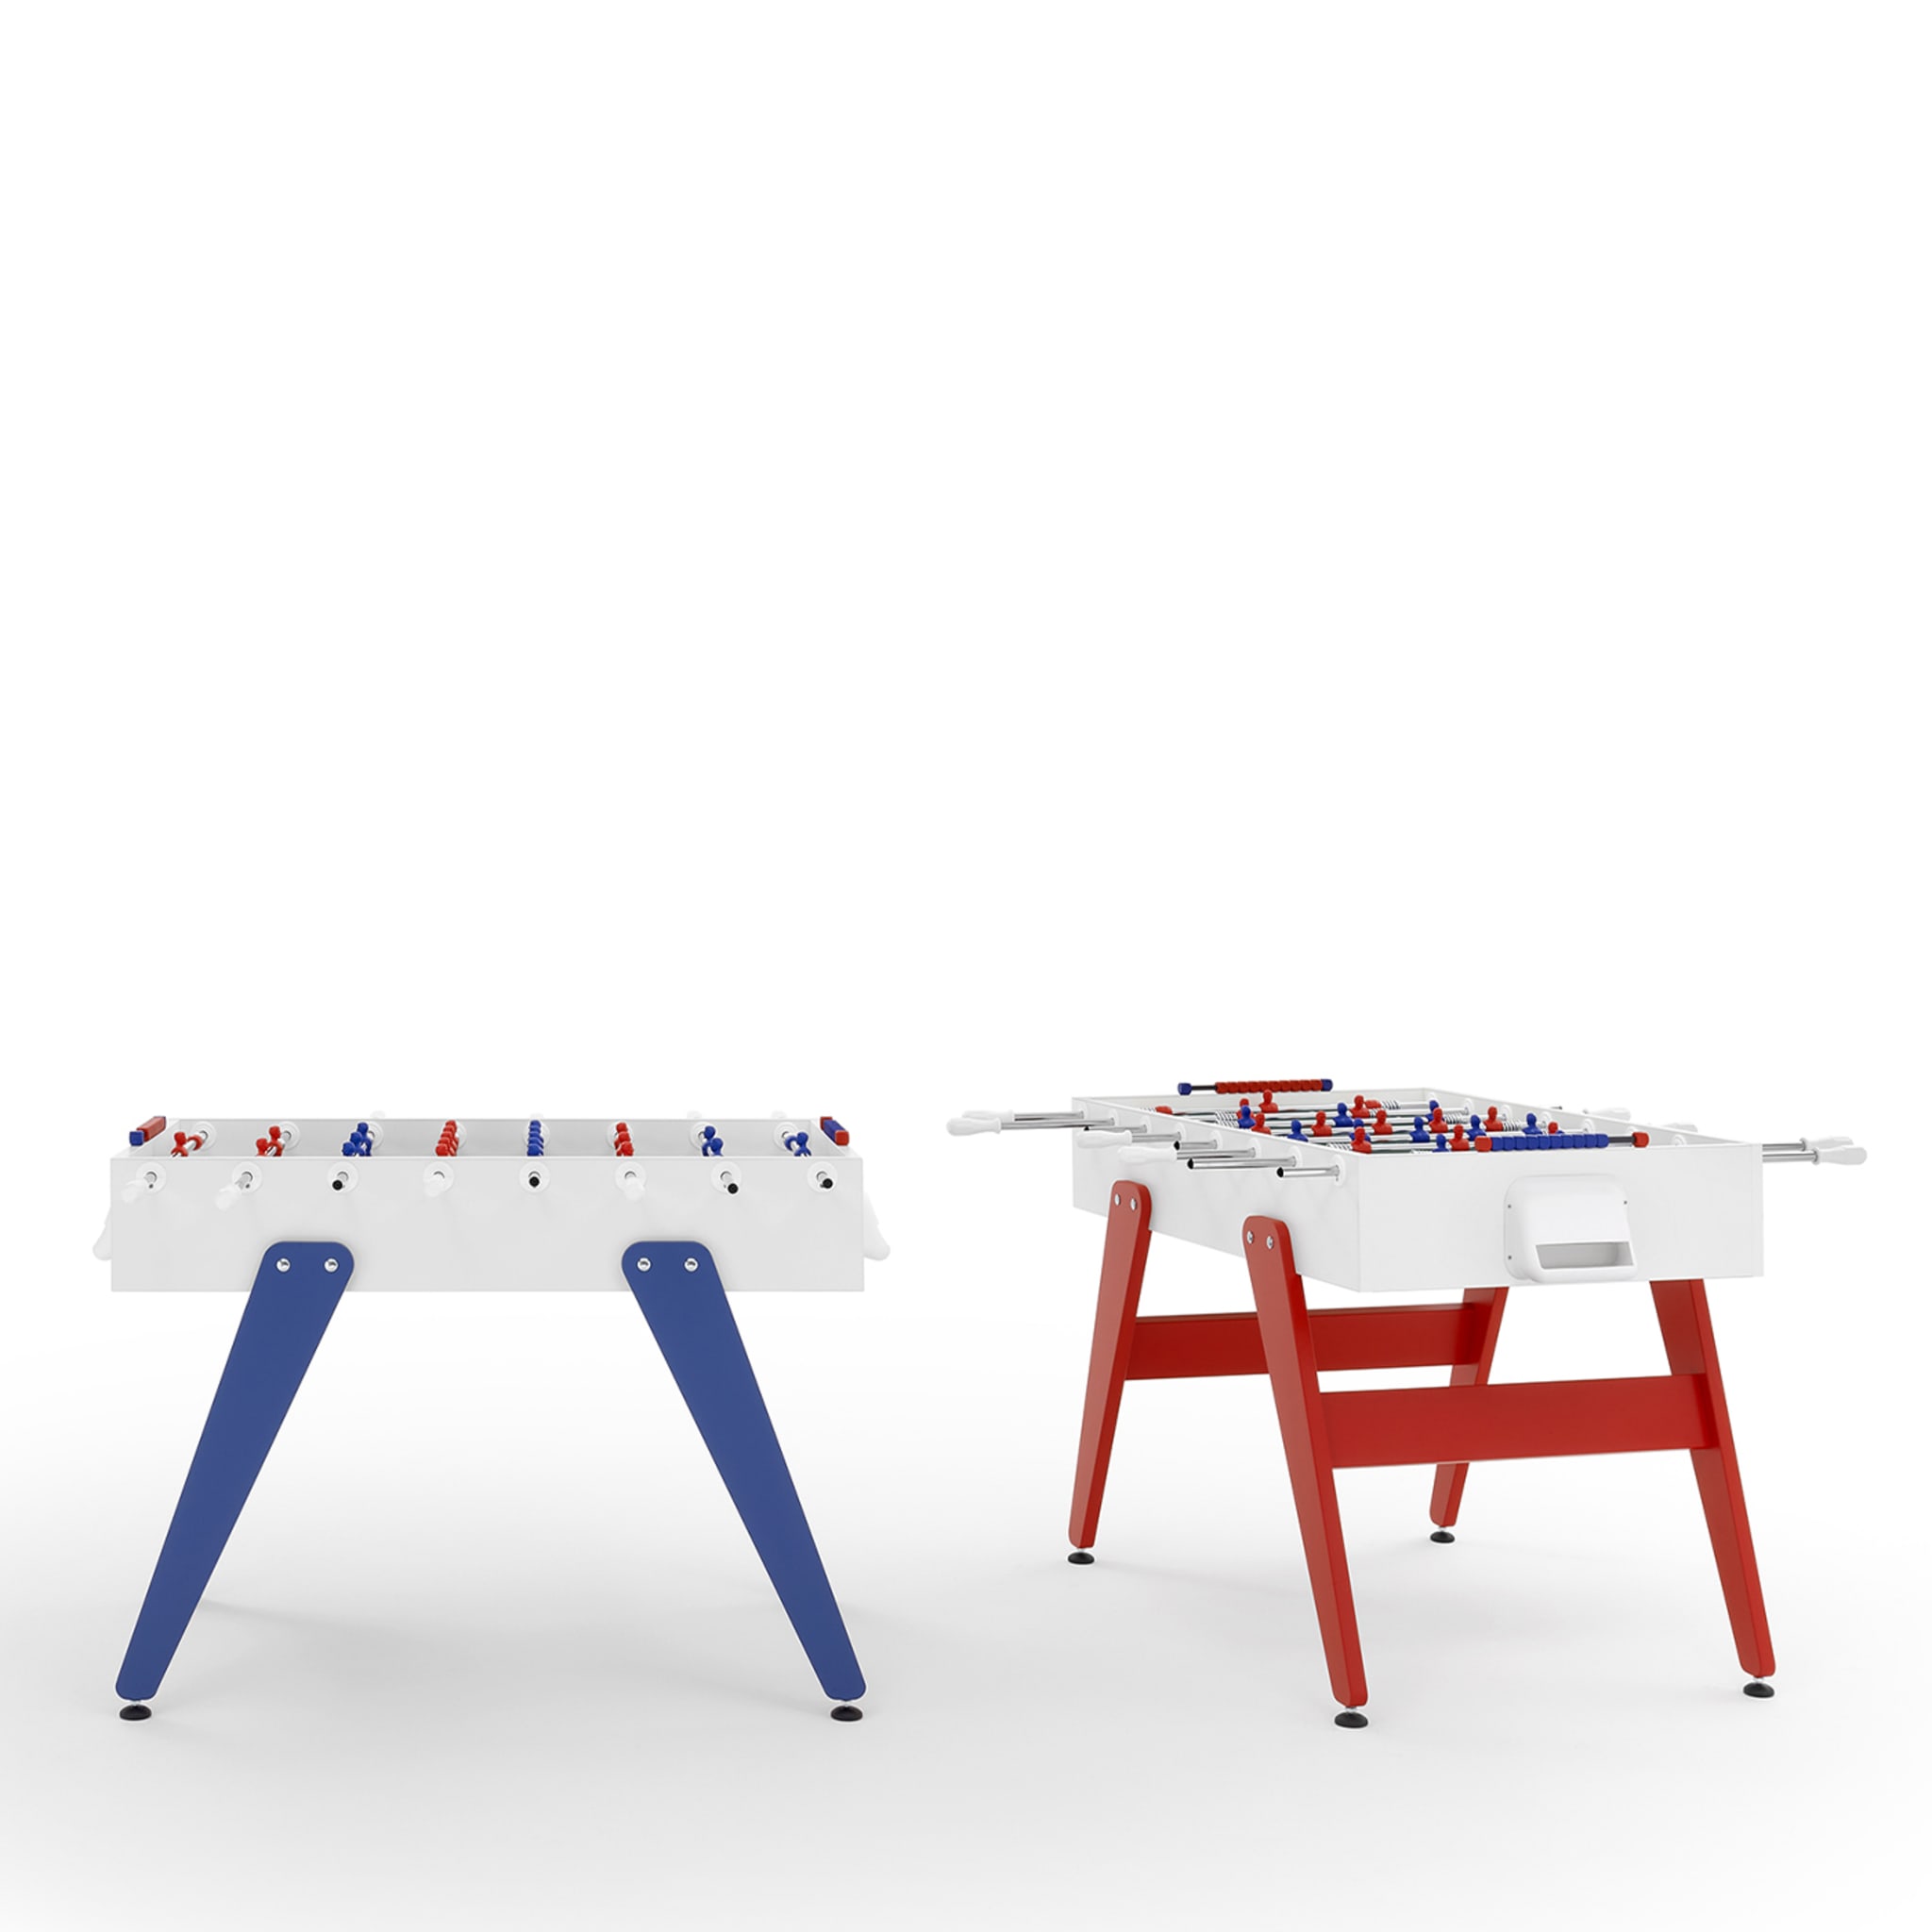 Cross White and Blue Foosball Table by Basaglia + Rota Nodari - Alternative view 5